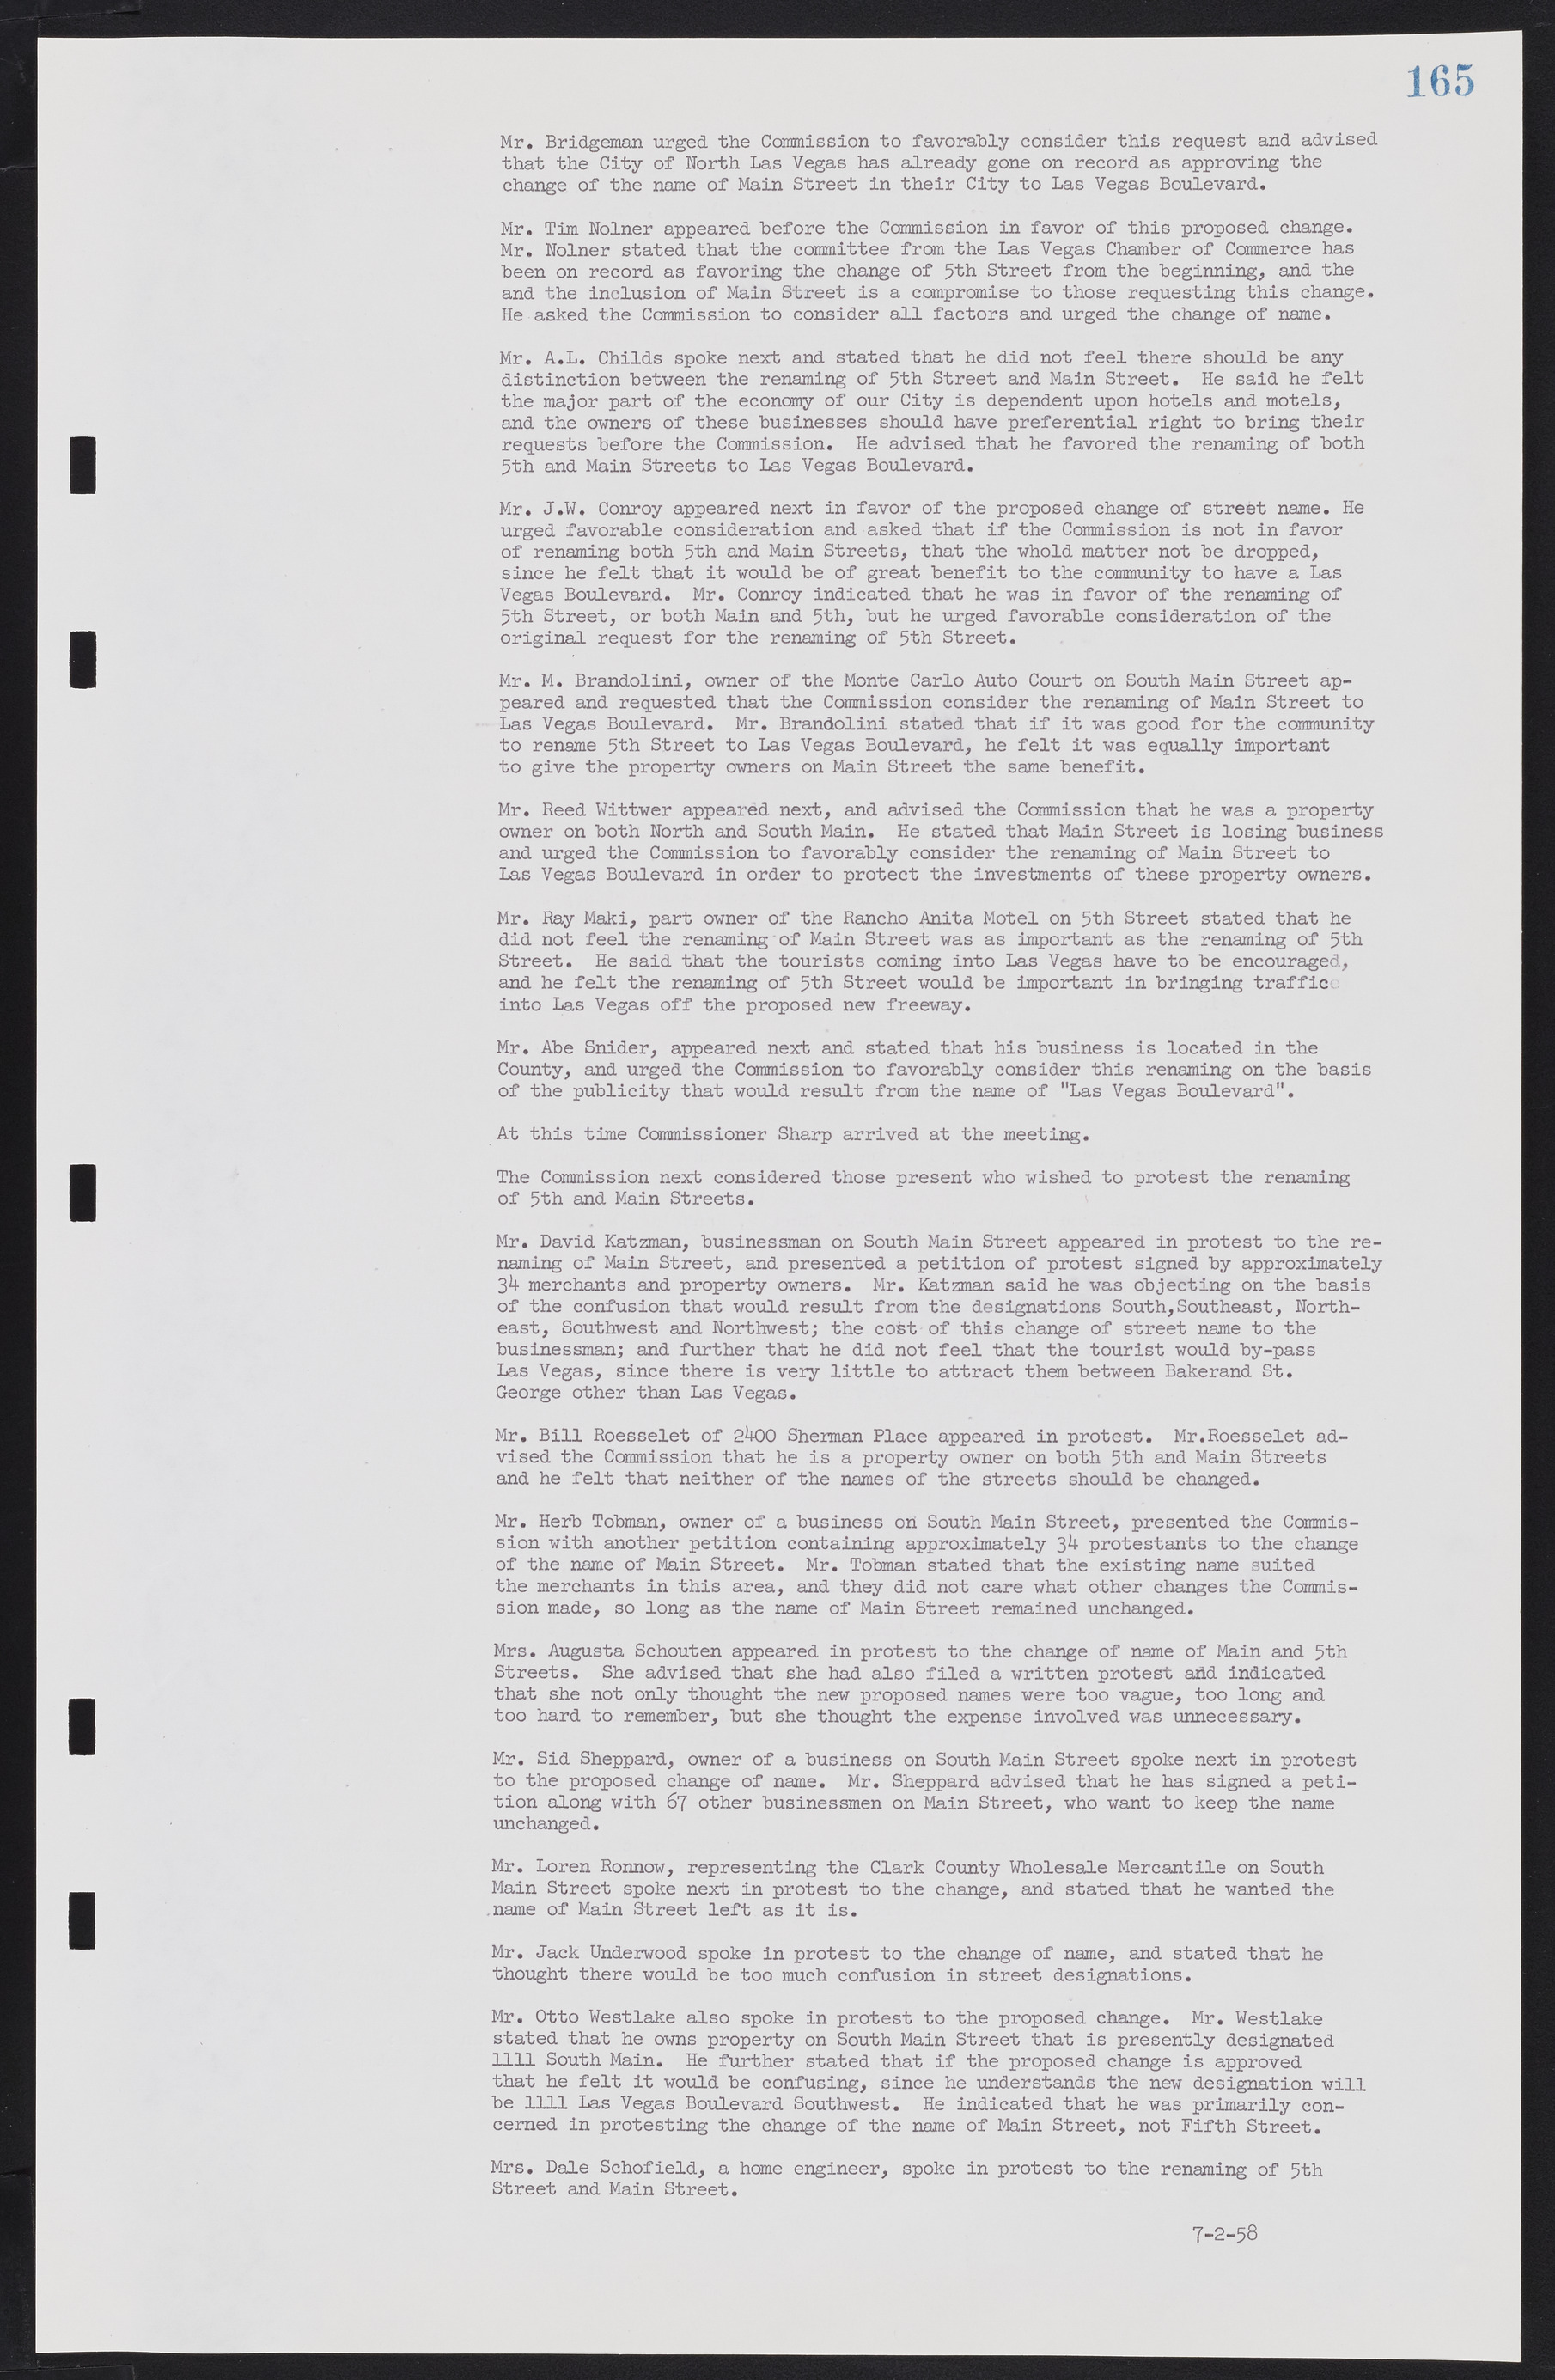 Las Vegas City Commission Minutes, November 20, 1957 to December 2, 1959, lvc000011-169